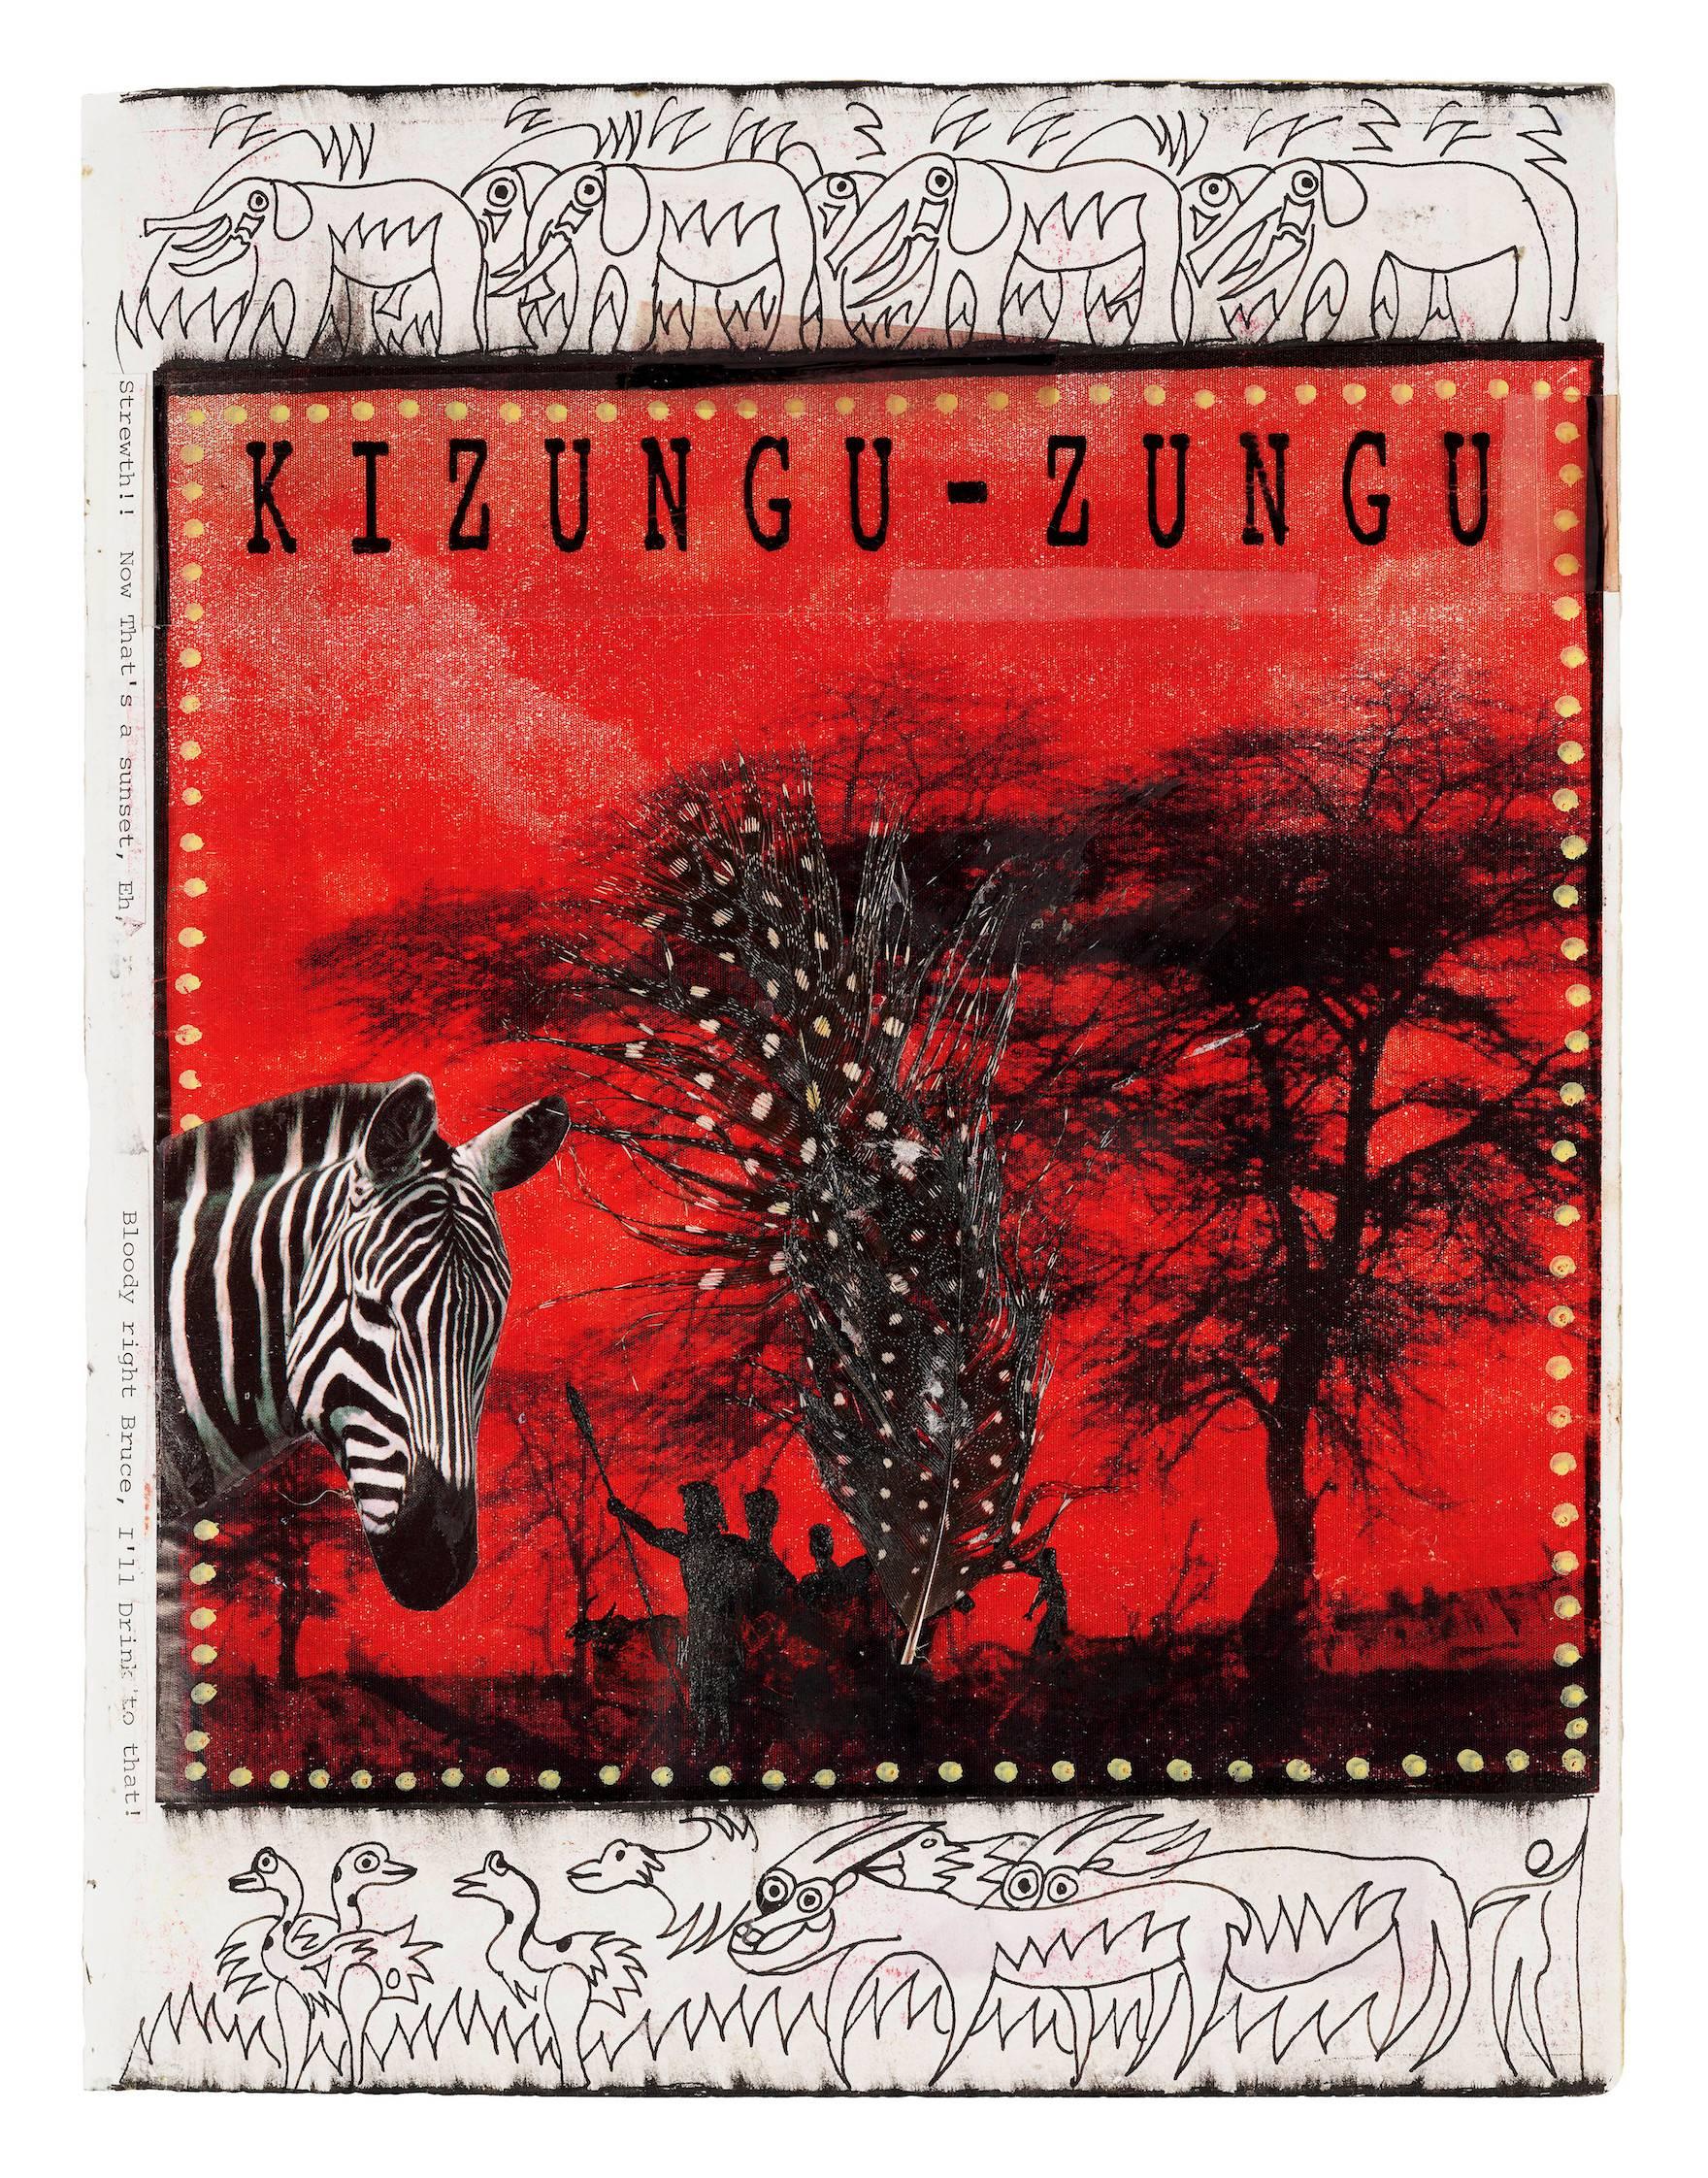 Kizungu-Zungu